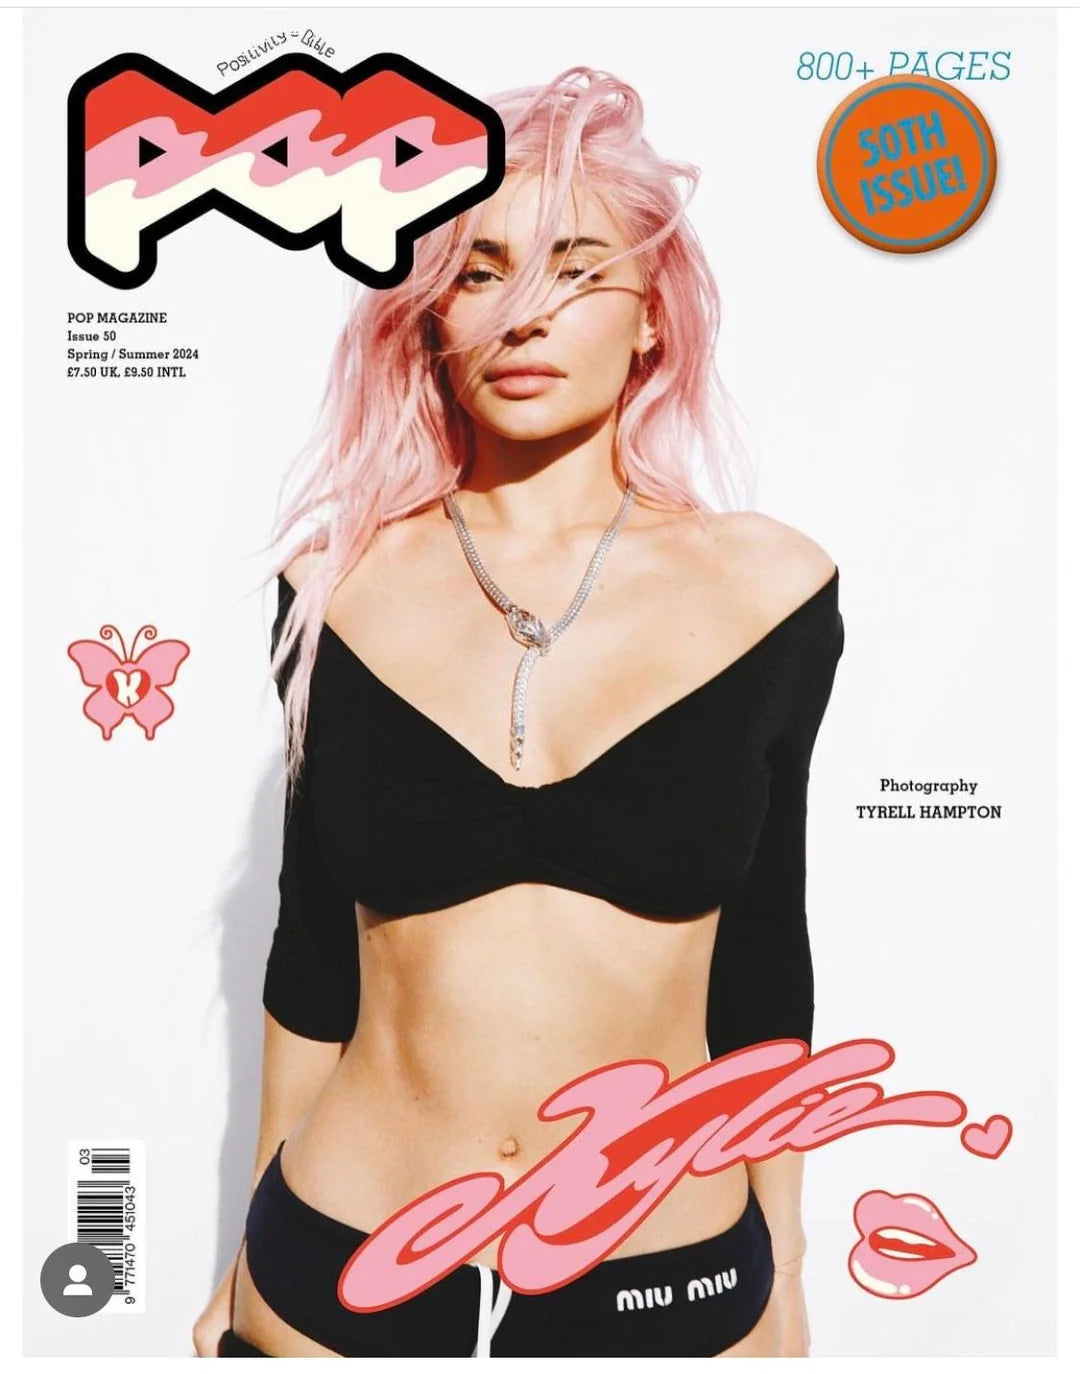 POP Magazine